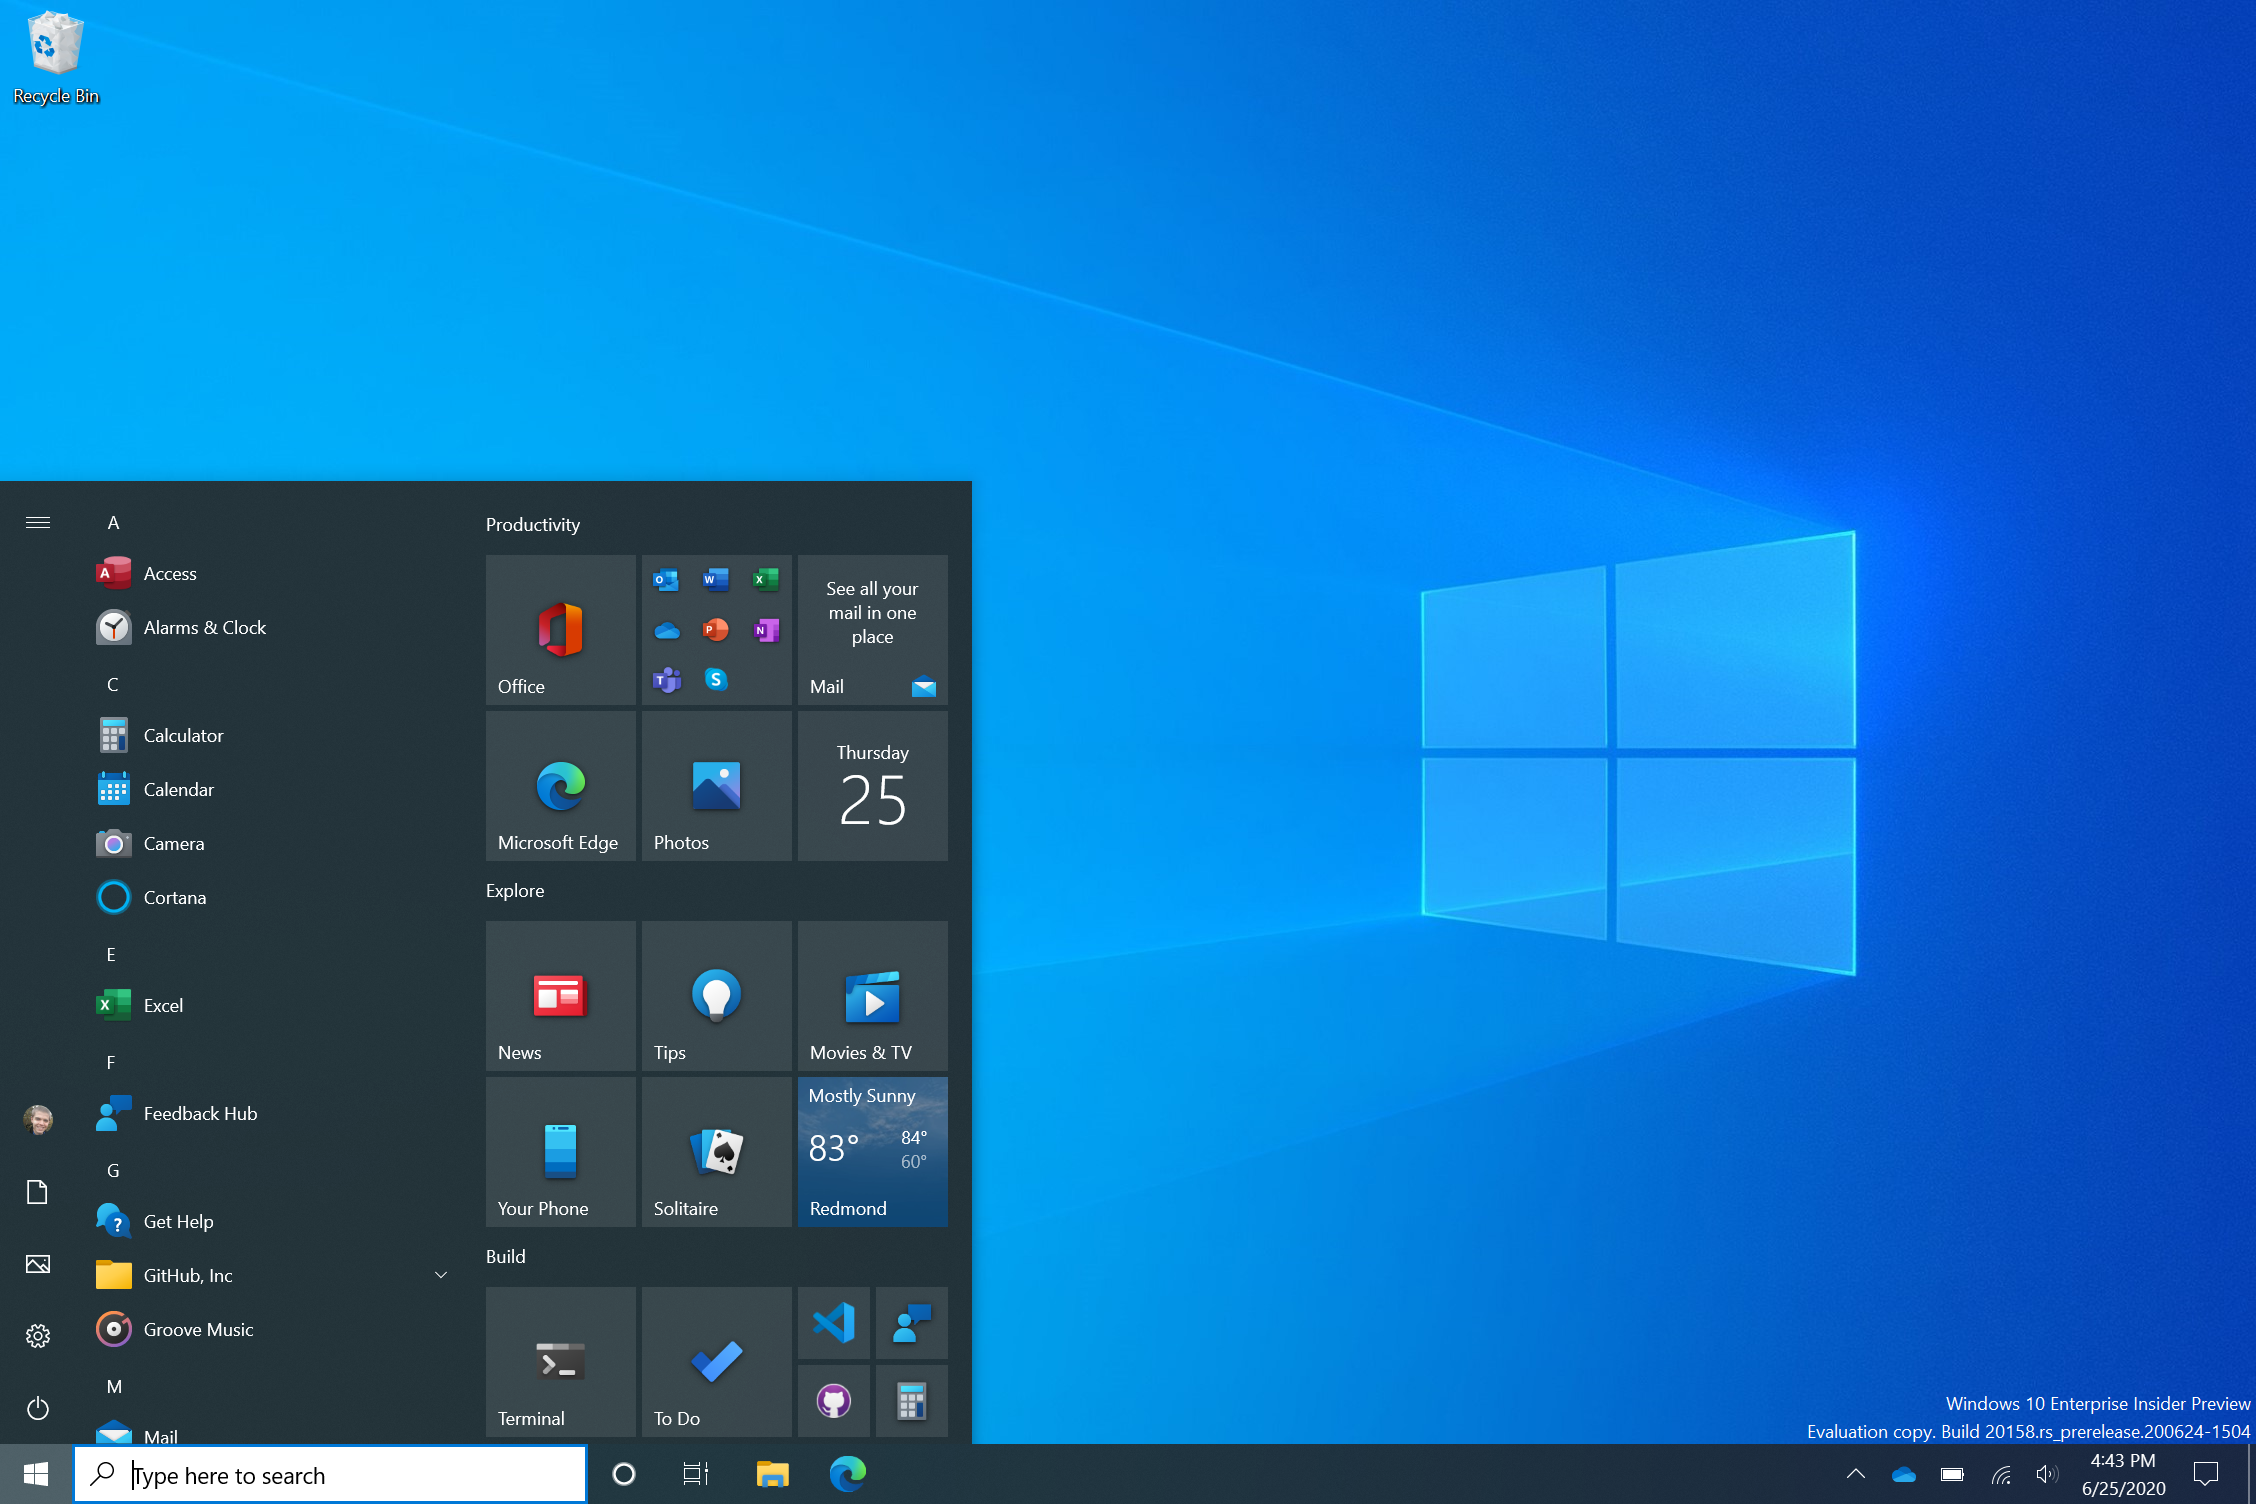 Windows 10 startmenu